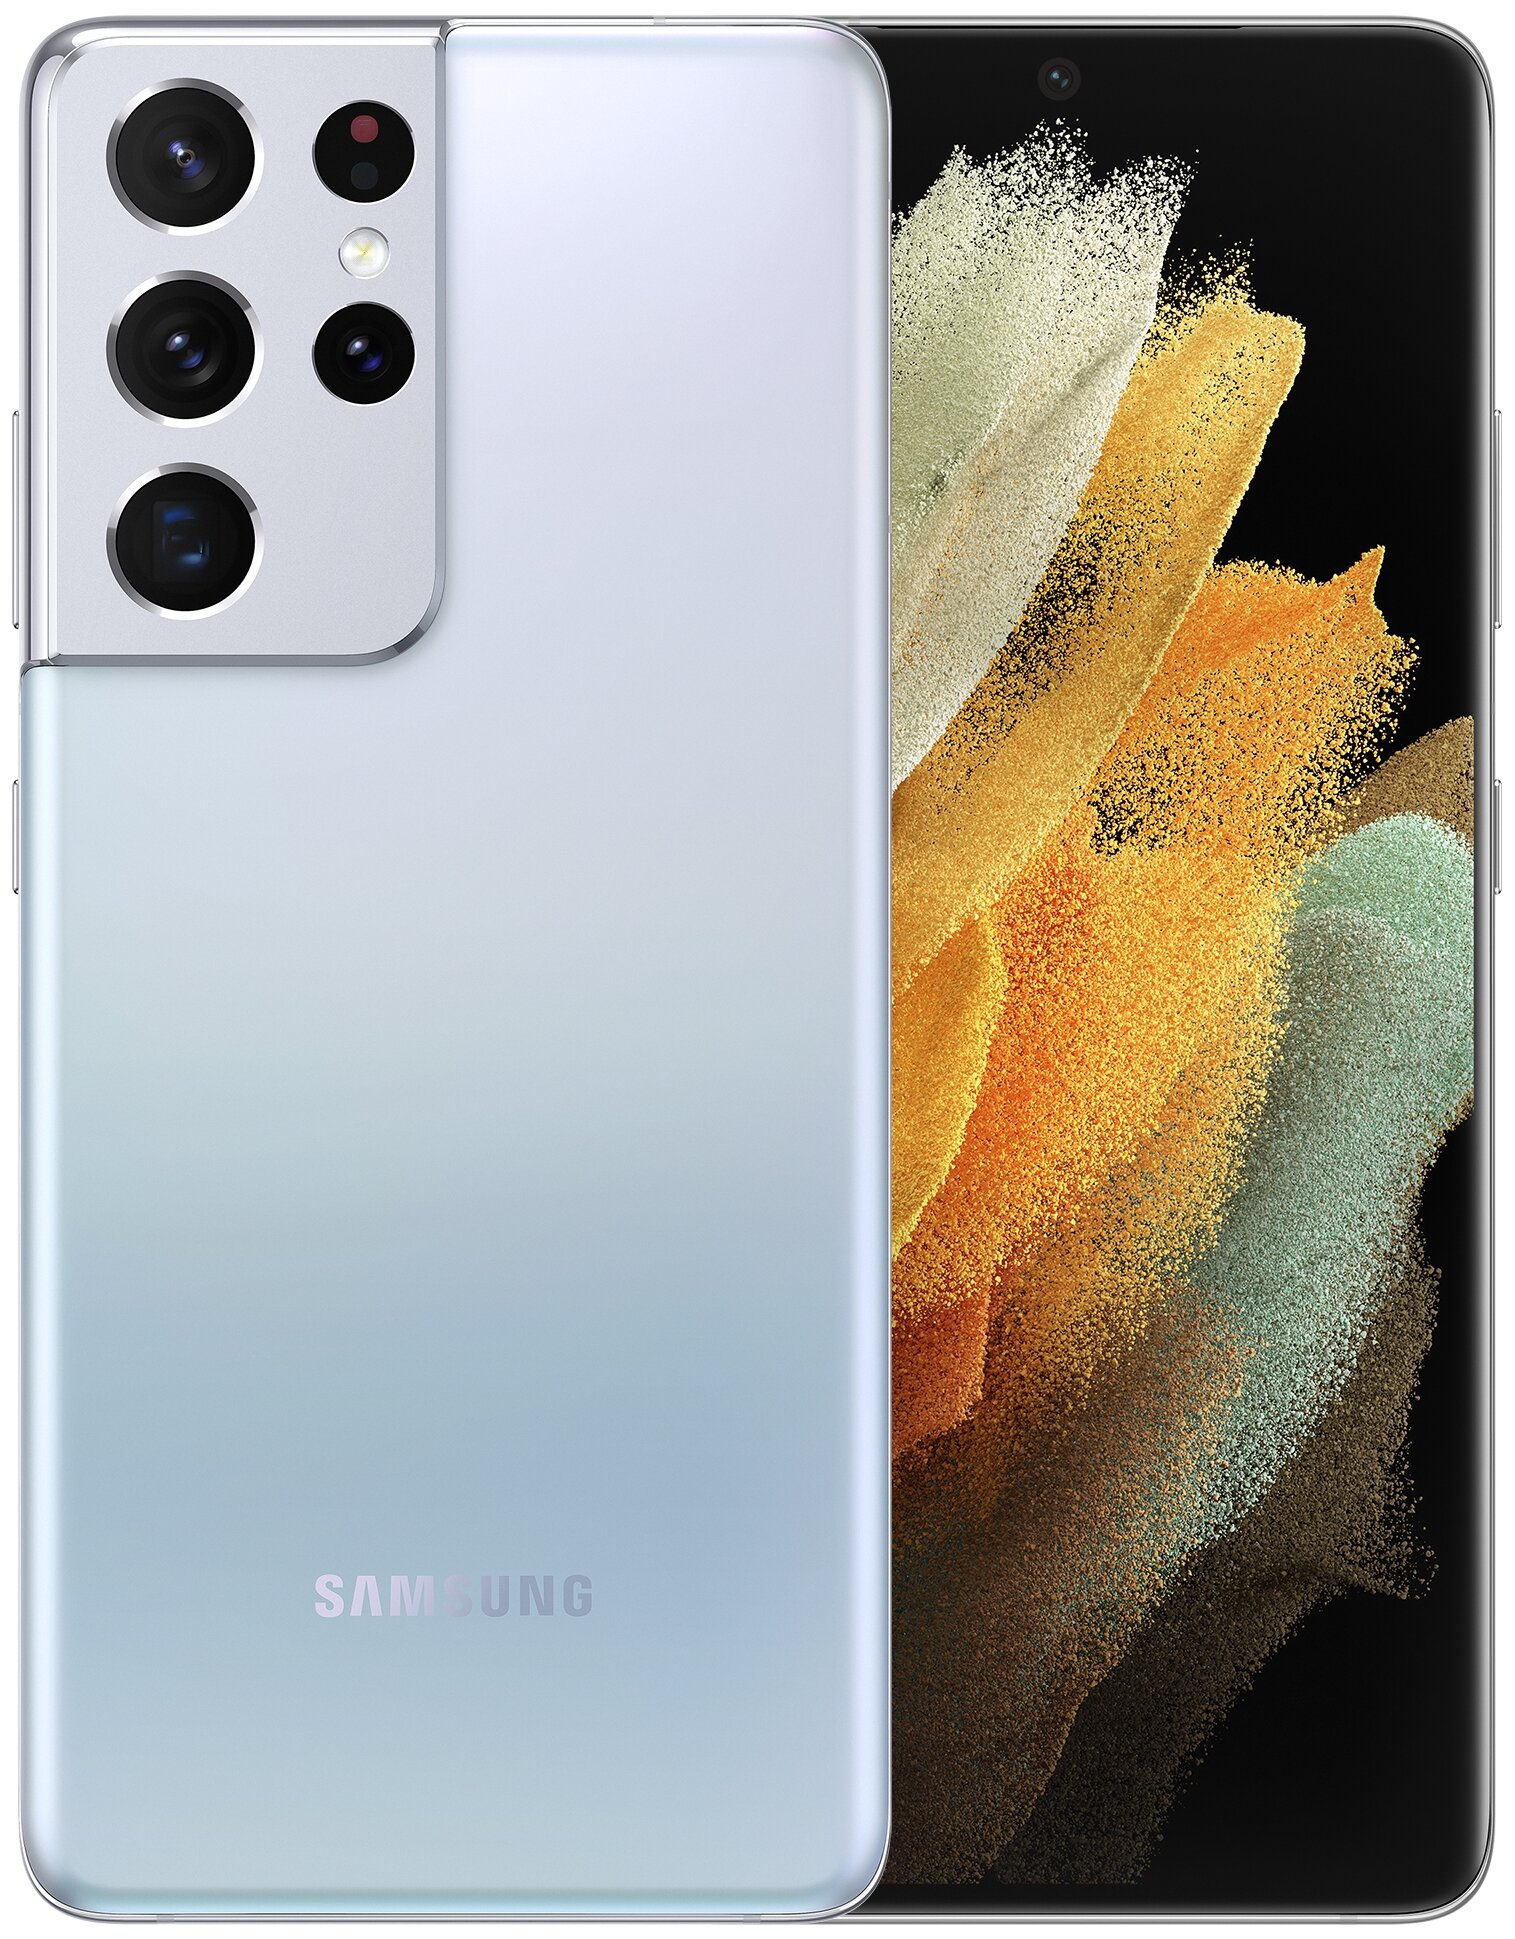 Samsung Galaxy S21 Ultra 5G (SM-G998B)